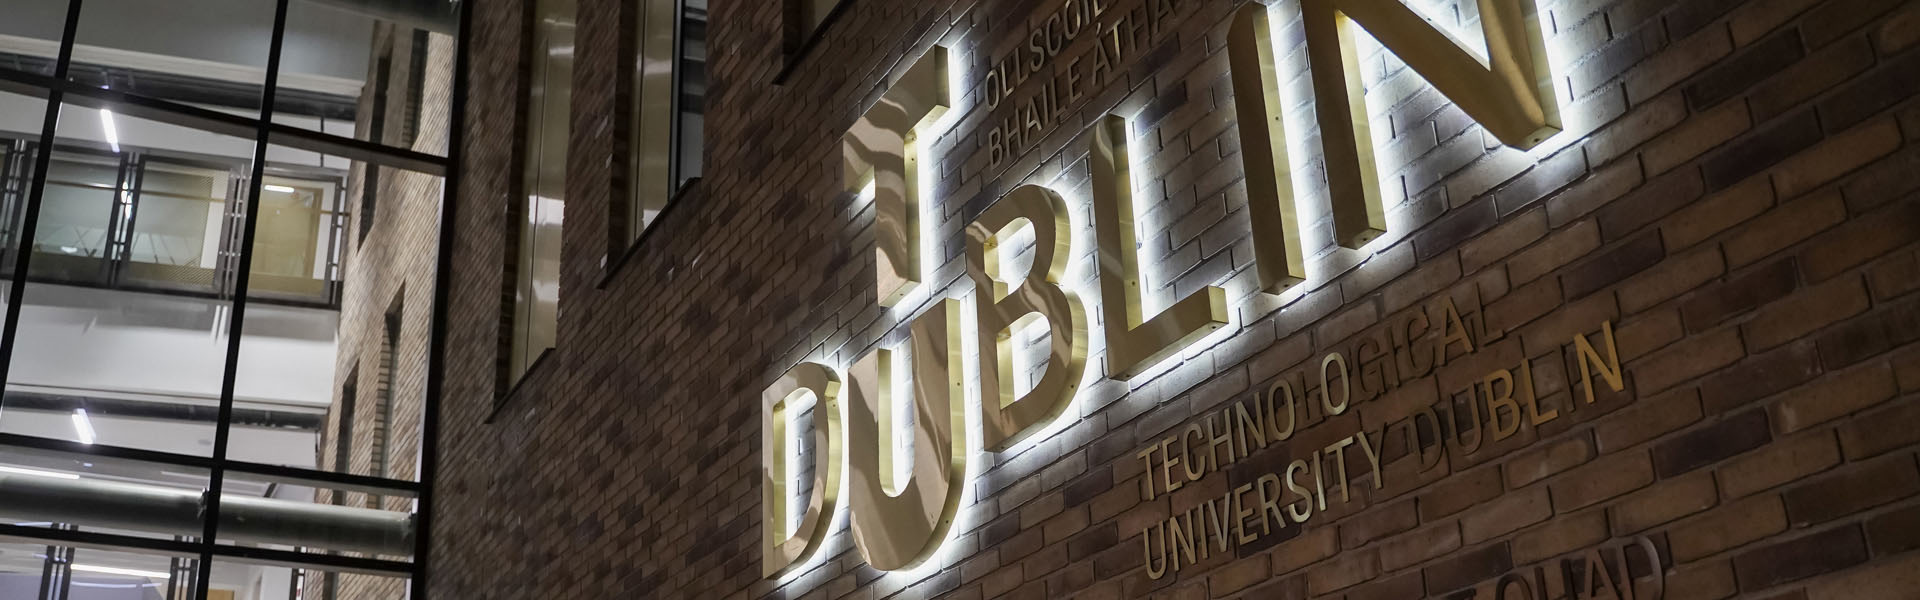 Backlit brass TU Dublin logo sign on the front entrance of the East Quad